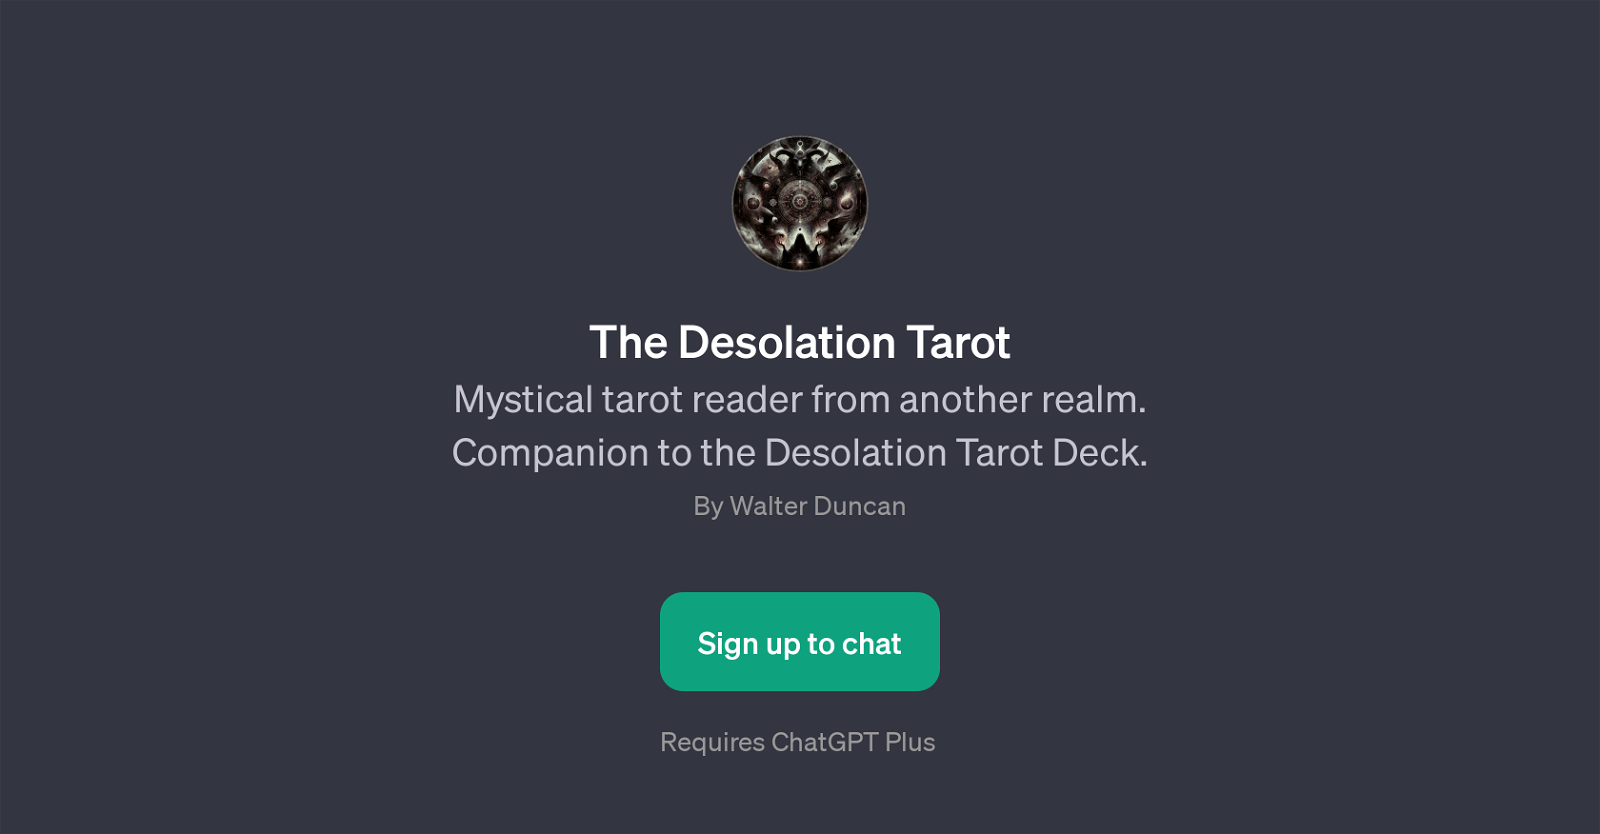 The Desolation Tarot website